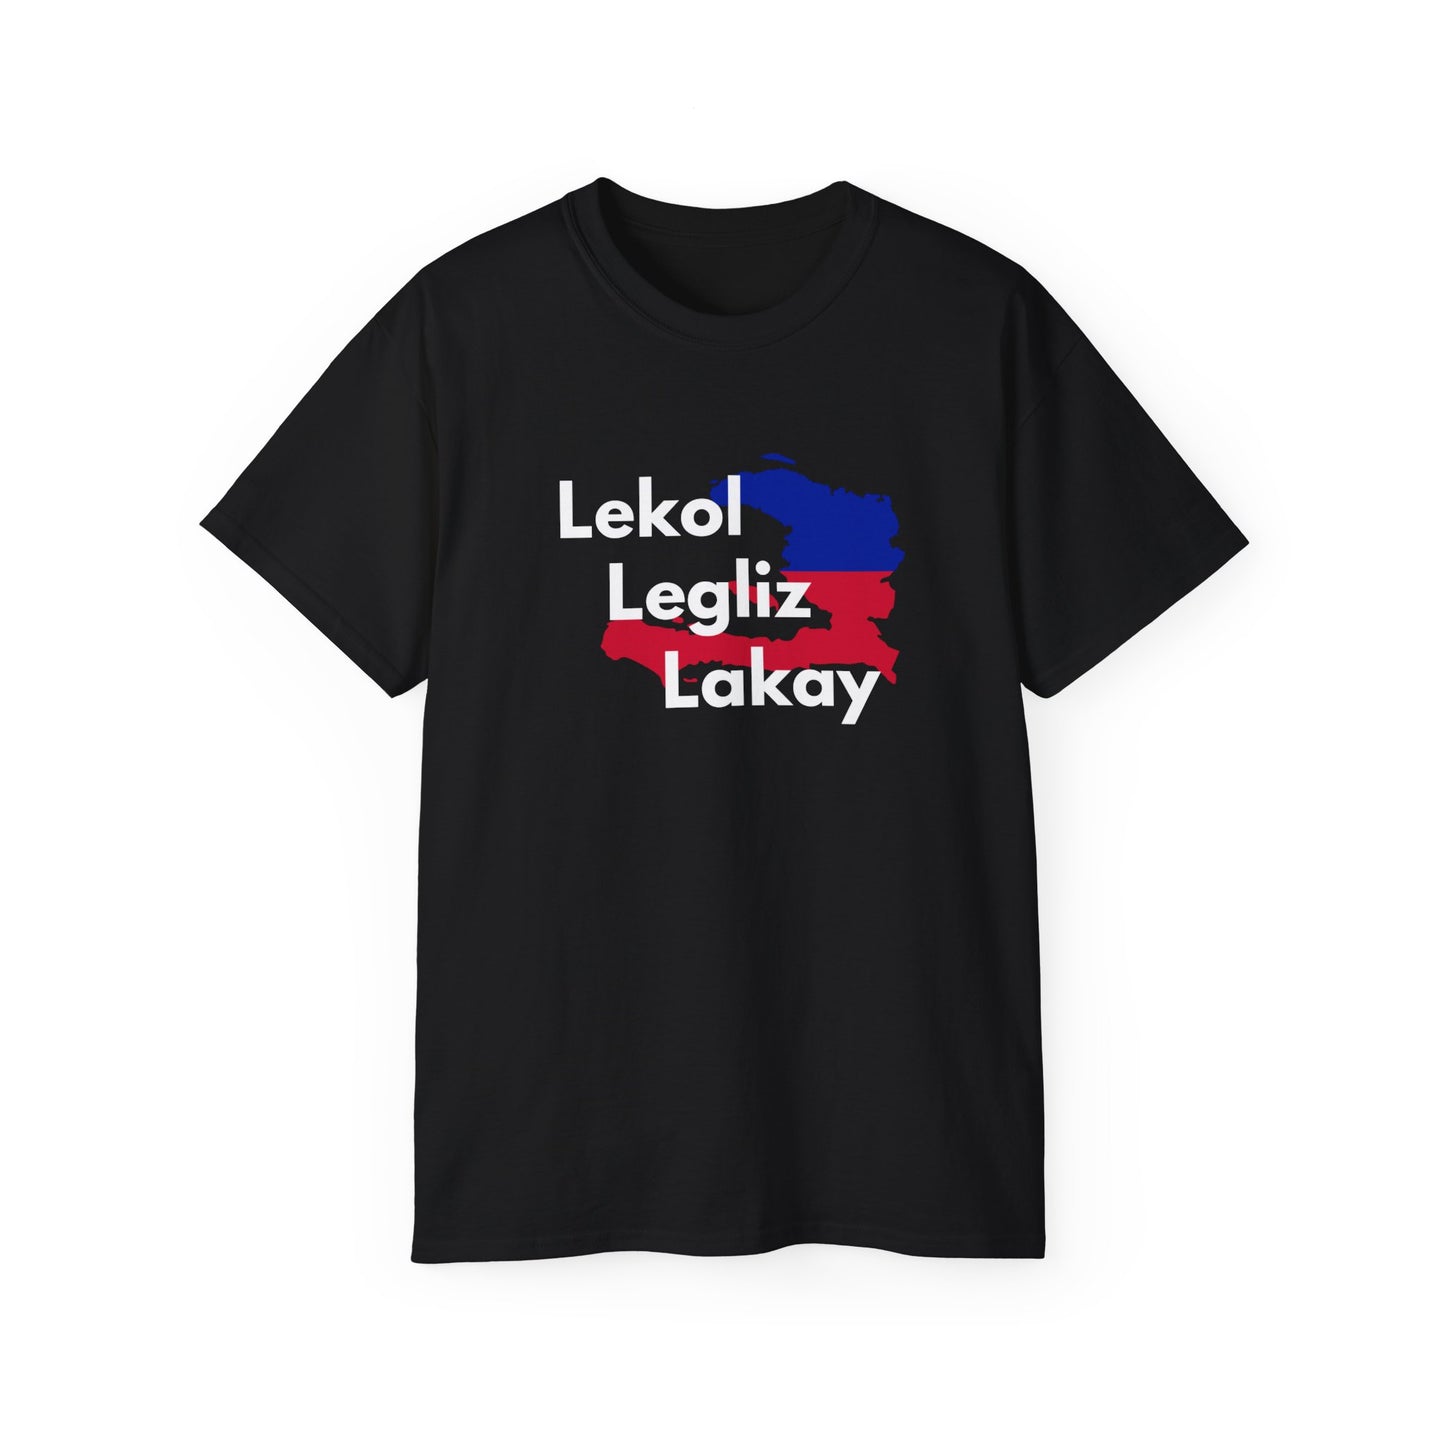 Lekol Legliz Lakay Tee Shirt - Sport Grey